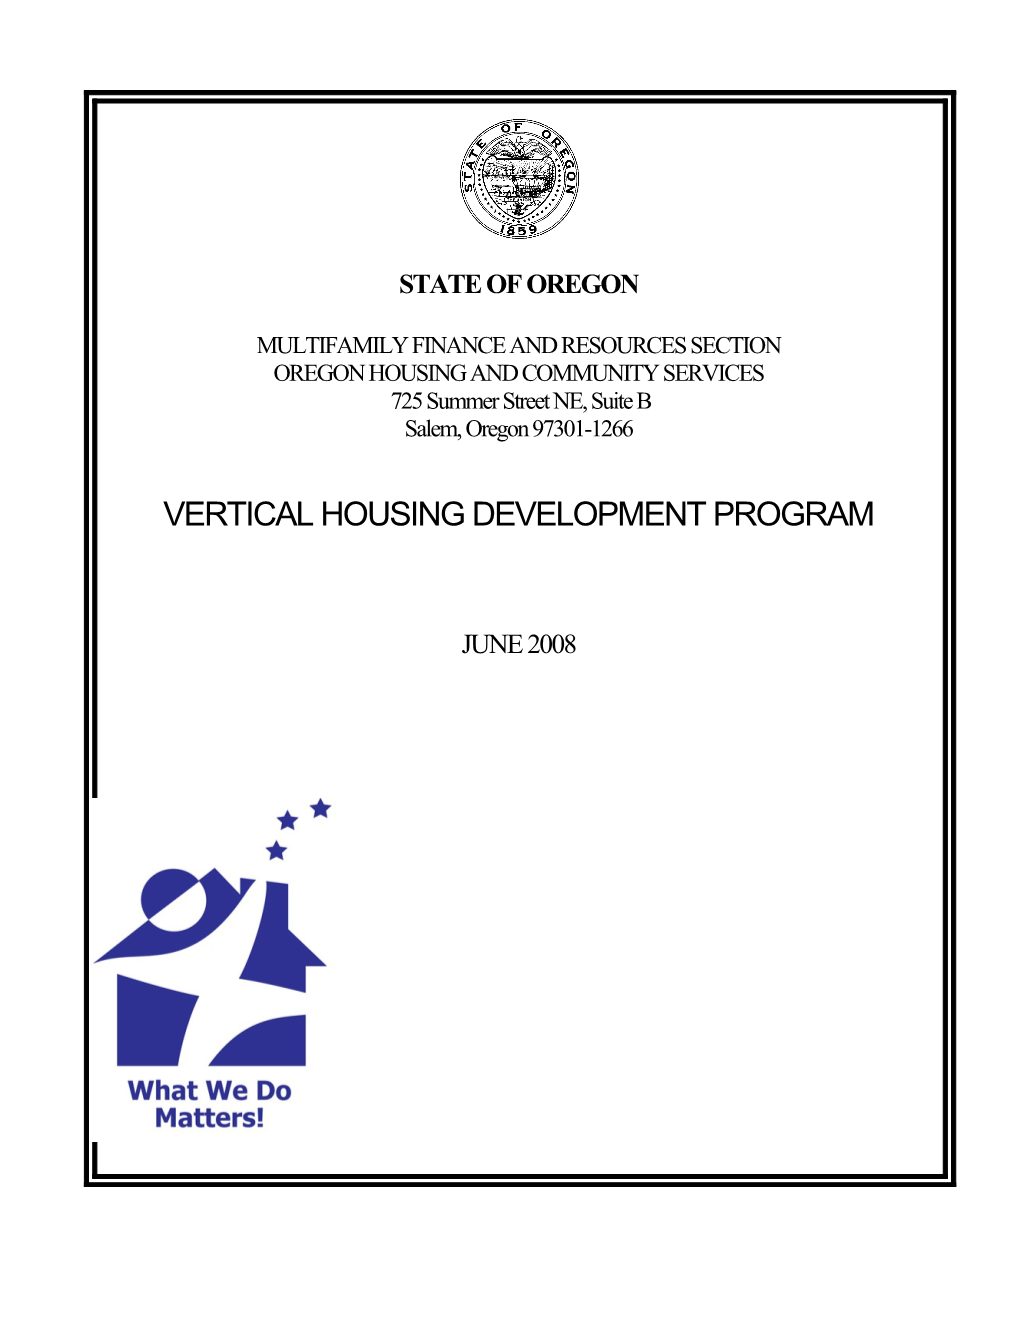 Loan Application: Vertical Housing Development Program